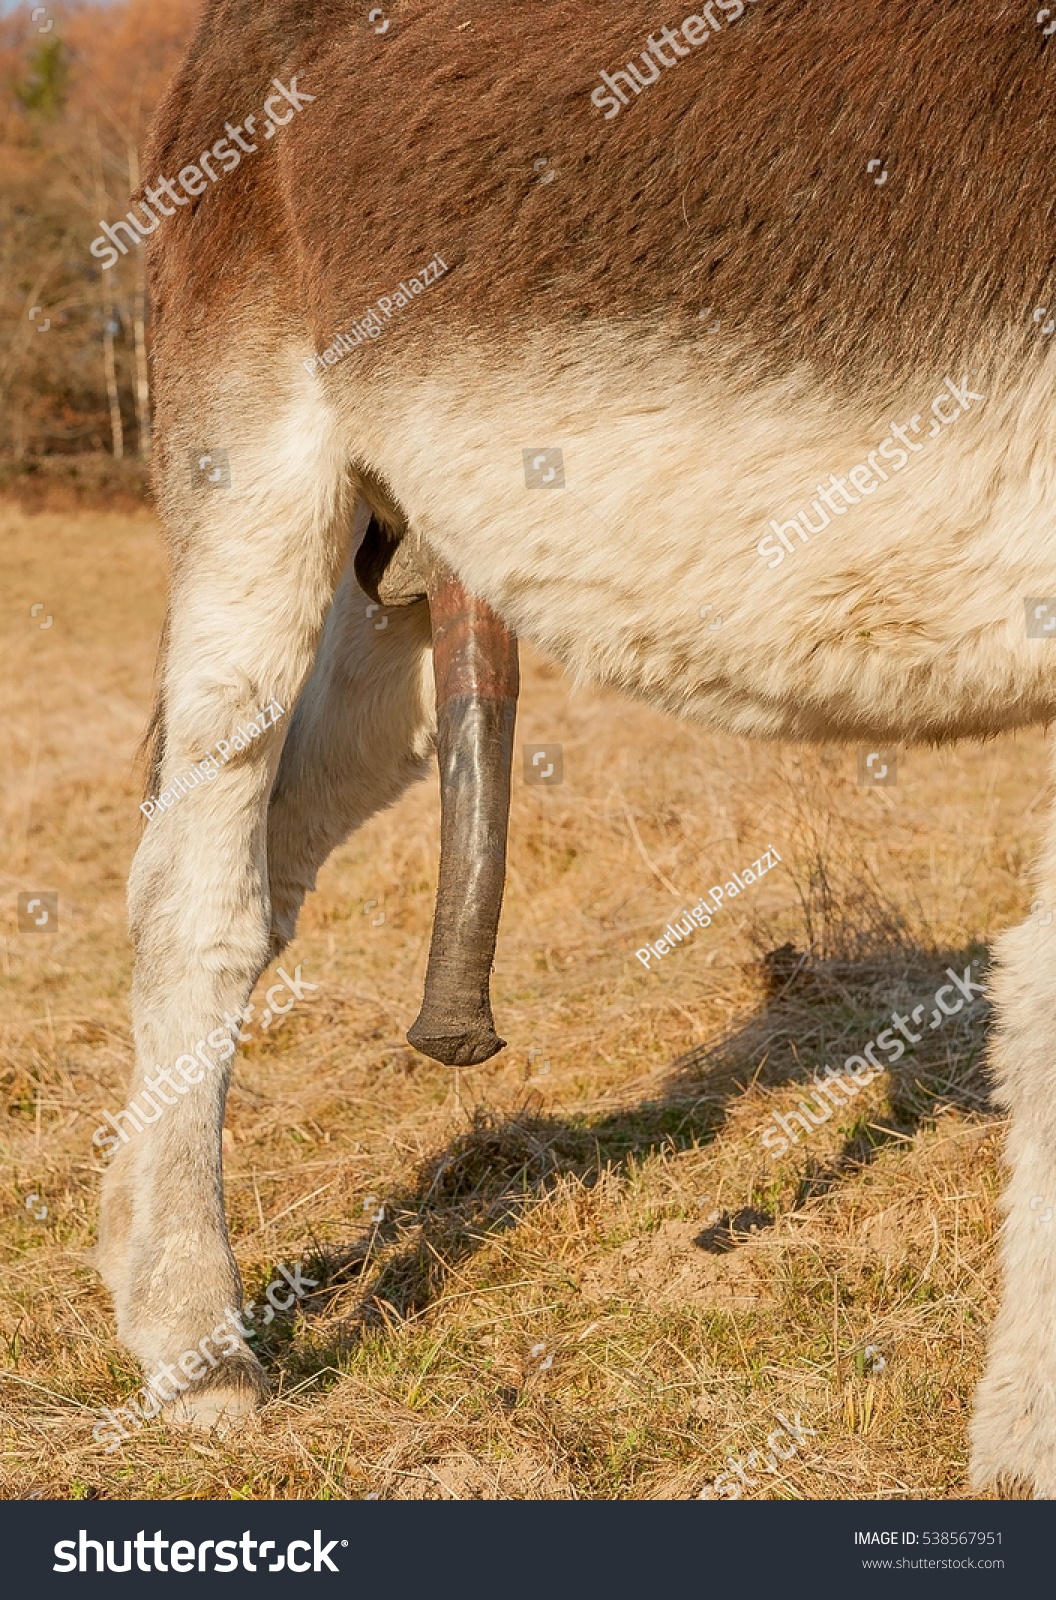 Стоковая фотография 538567951: Size Penis Donkey Shutterstock.